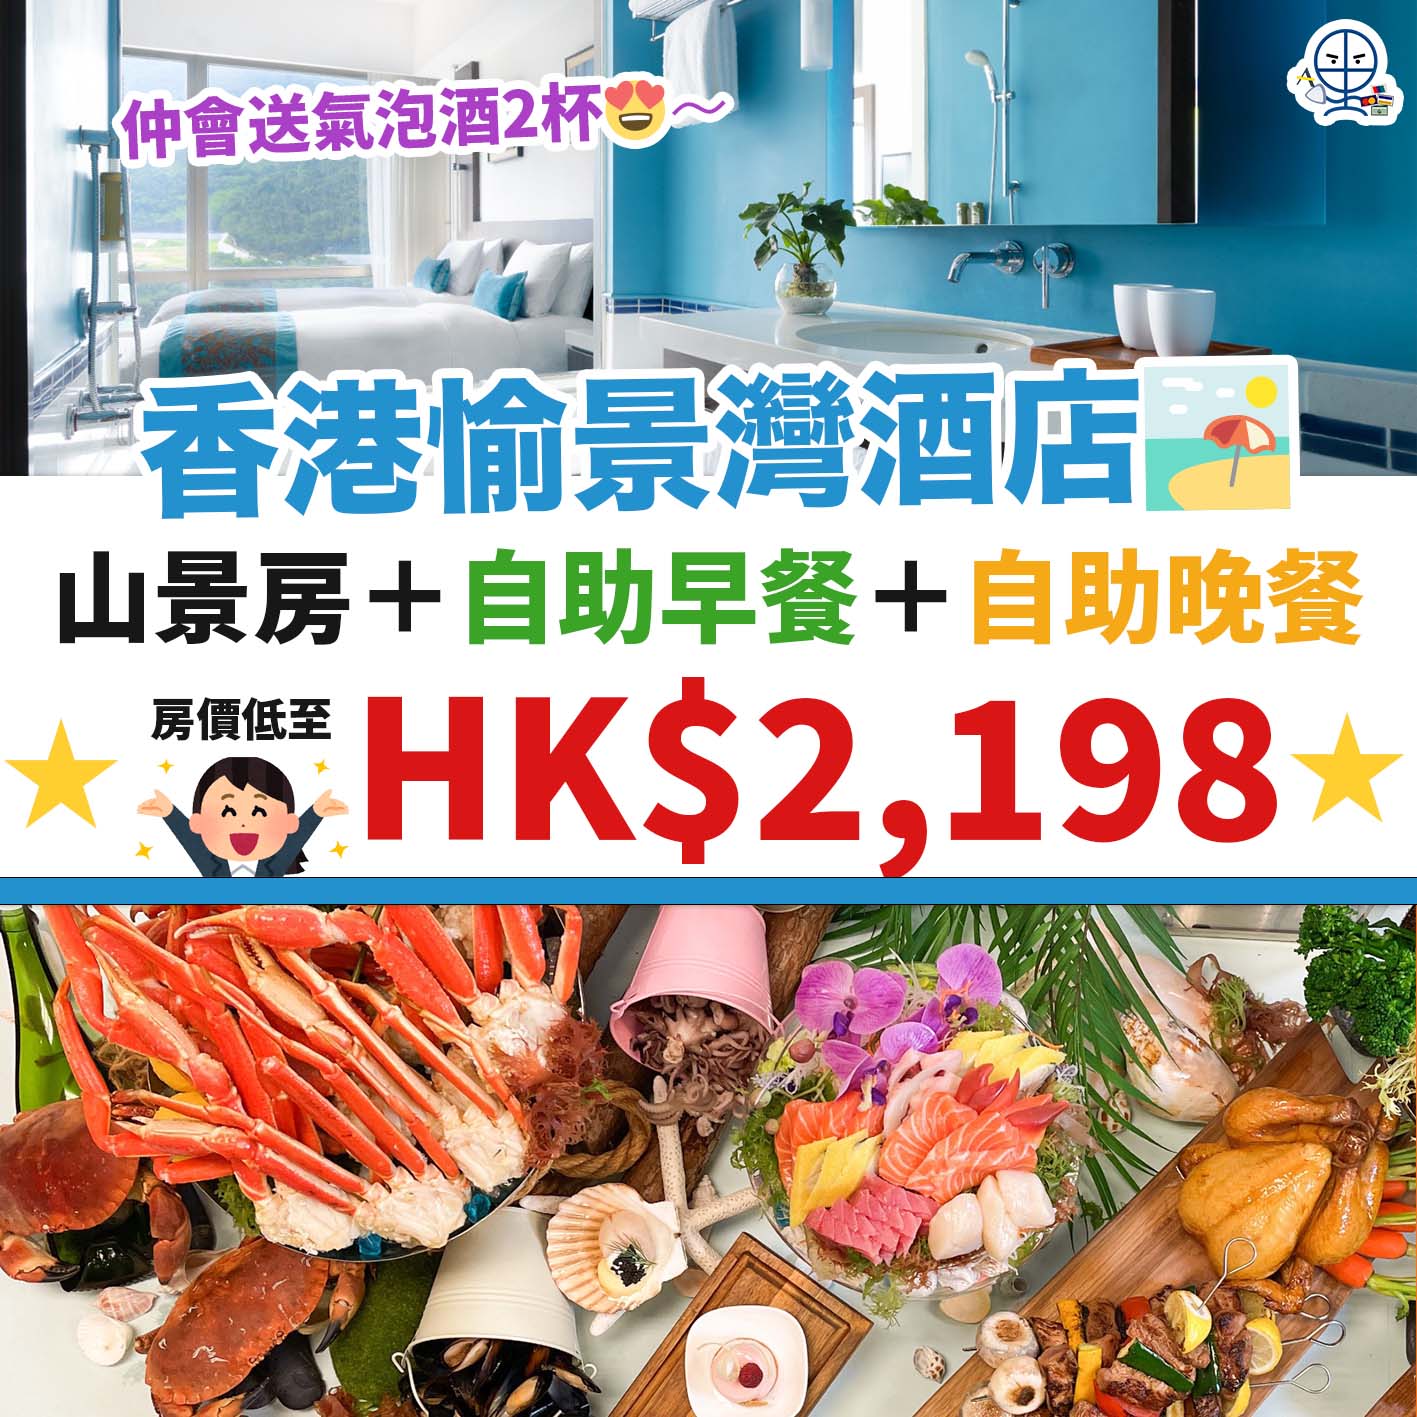 香港愉景灣酒店-staycation-hotel staycation-Auberge Discovery Bay Hong Kong-Auberge Discovery Bay Hong Kong staycation package